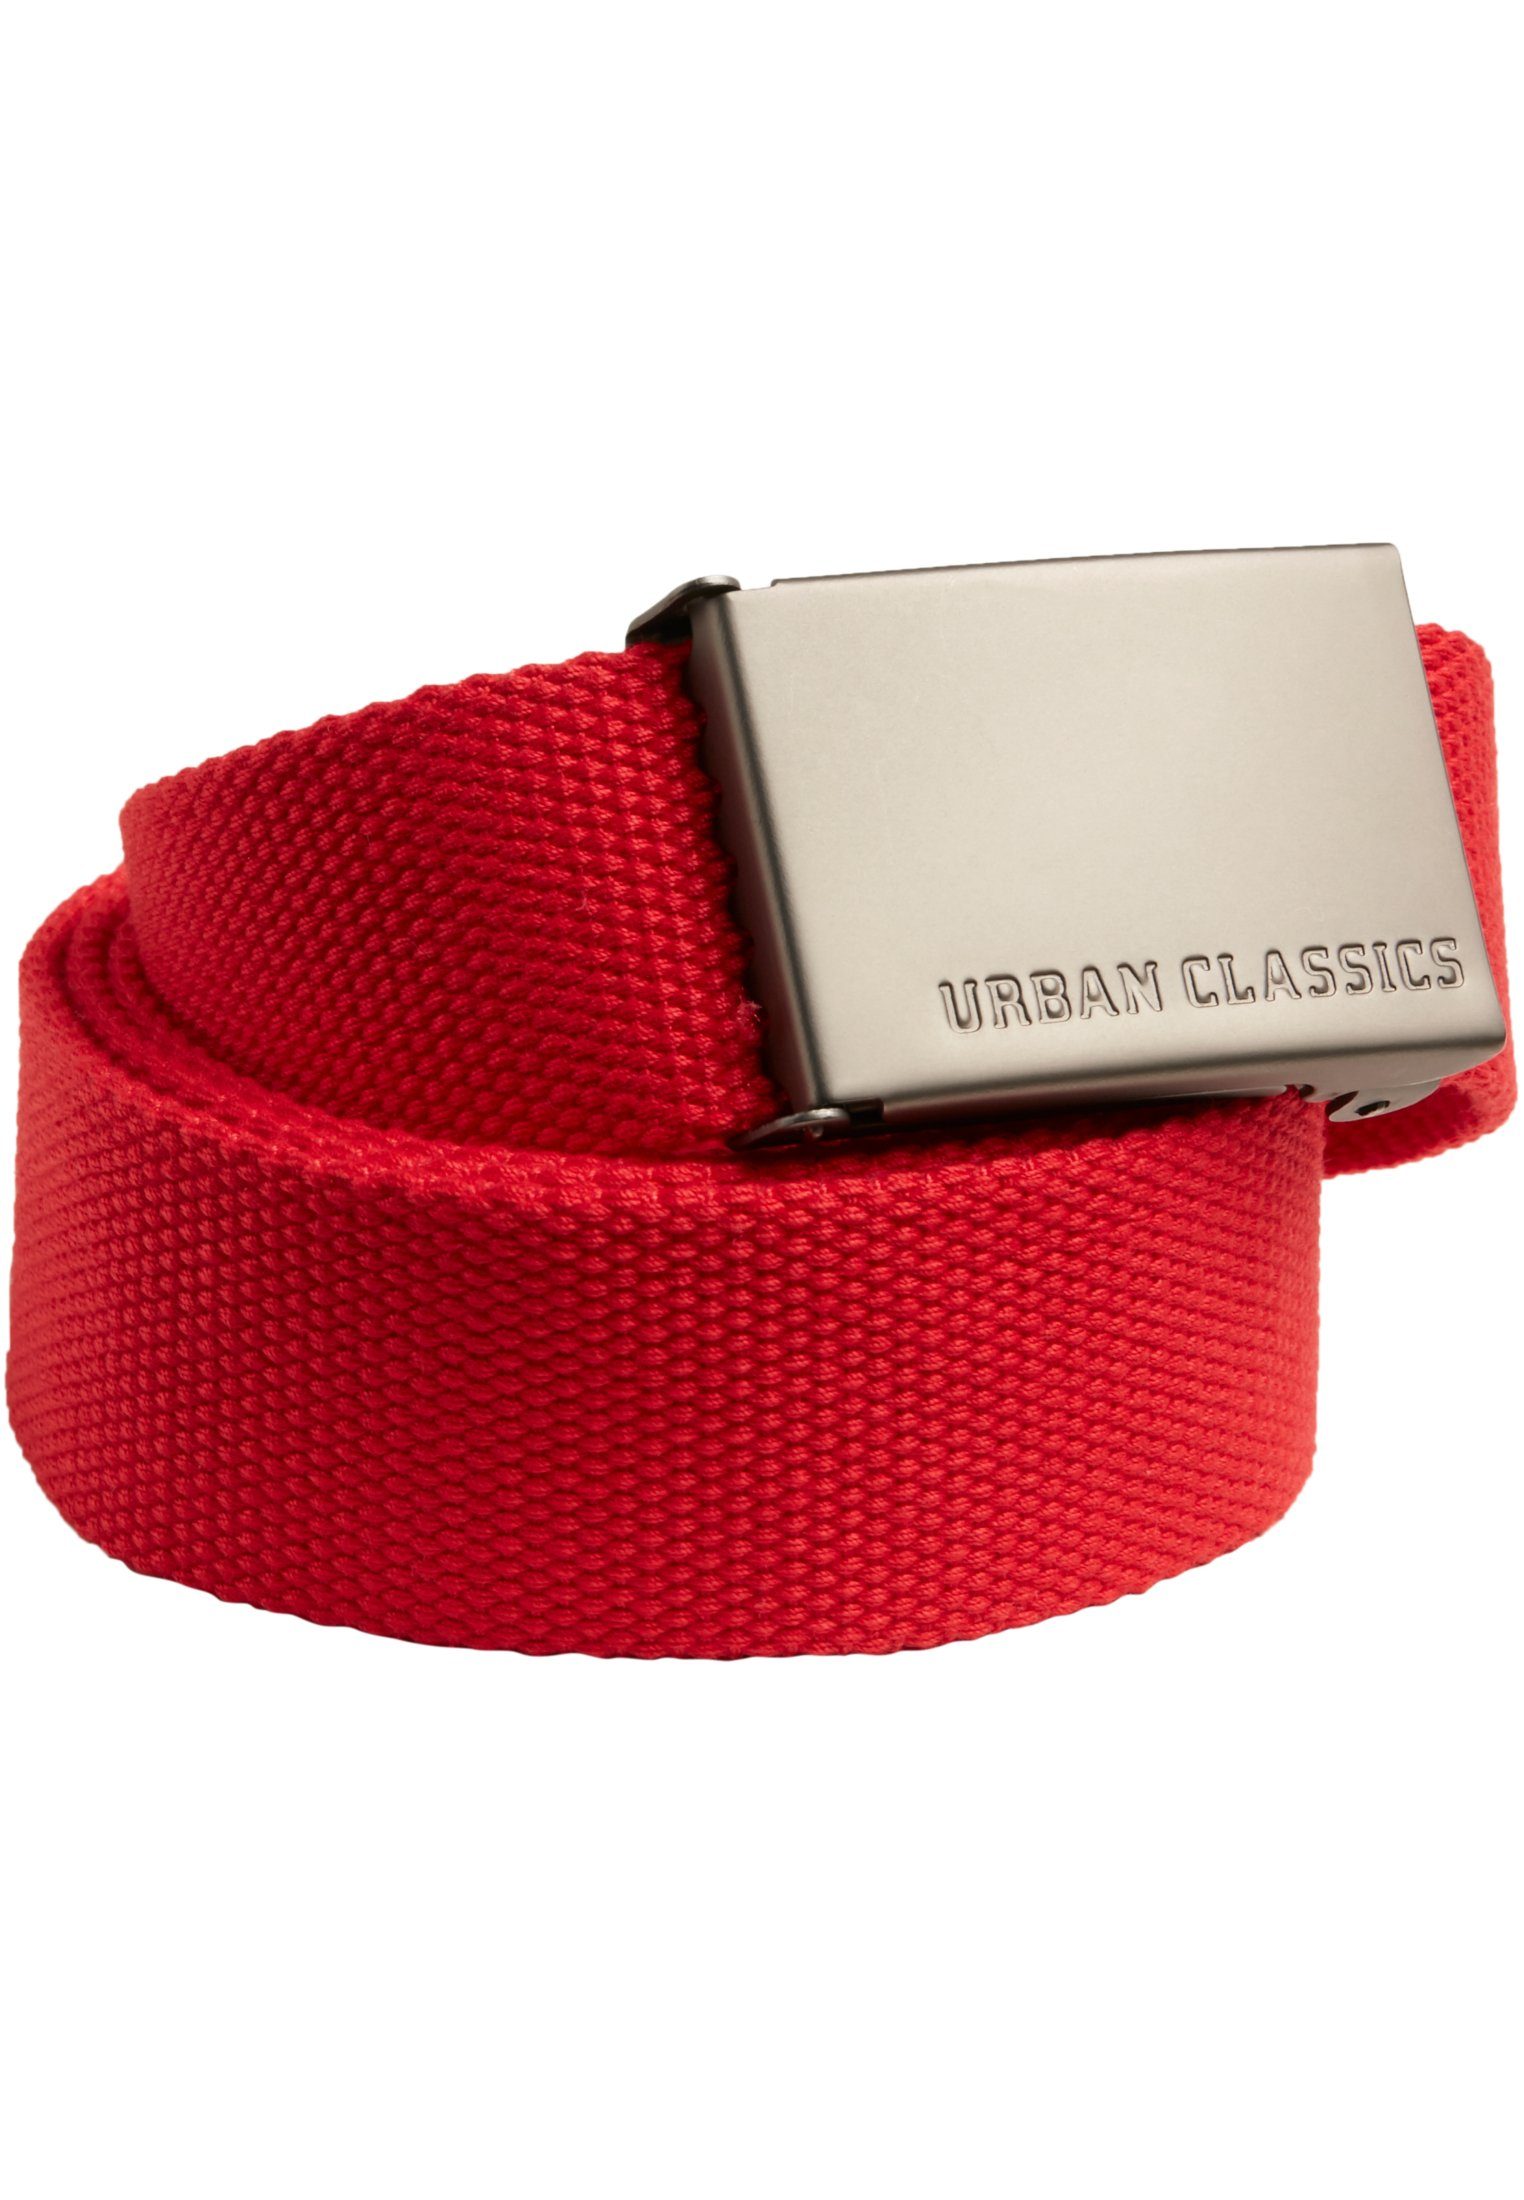 URBAN CLASSICS Hüftgürtel Accessoires Canvas Belts red